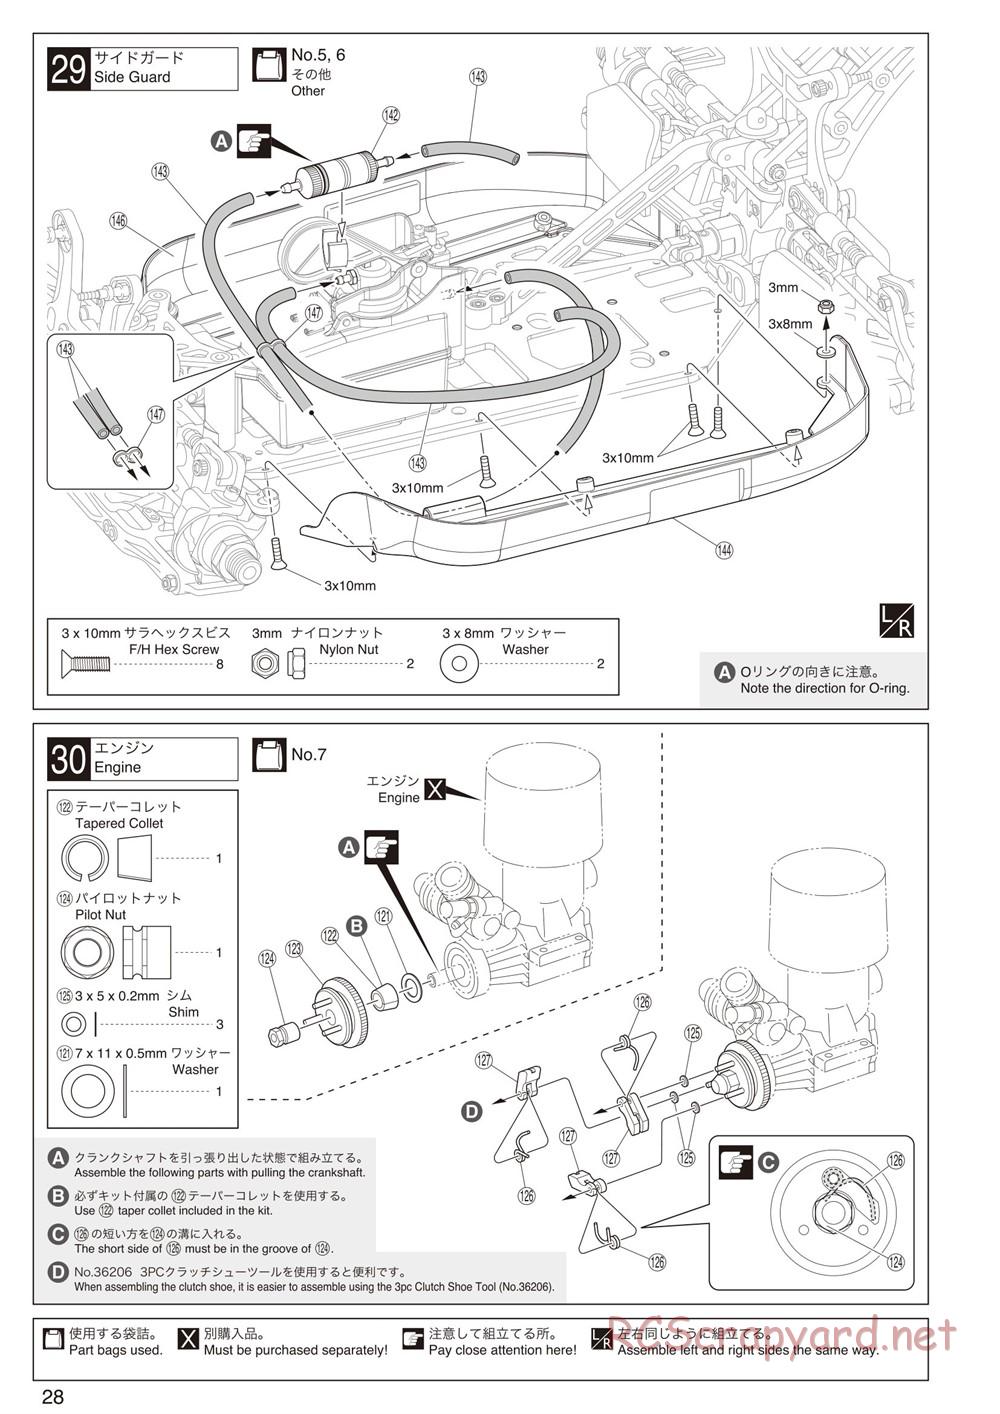 Kyosho - Inferno MP9 TKI4 - Manual - Page 28